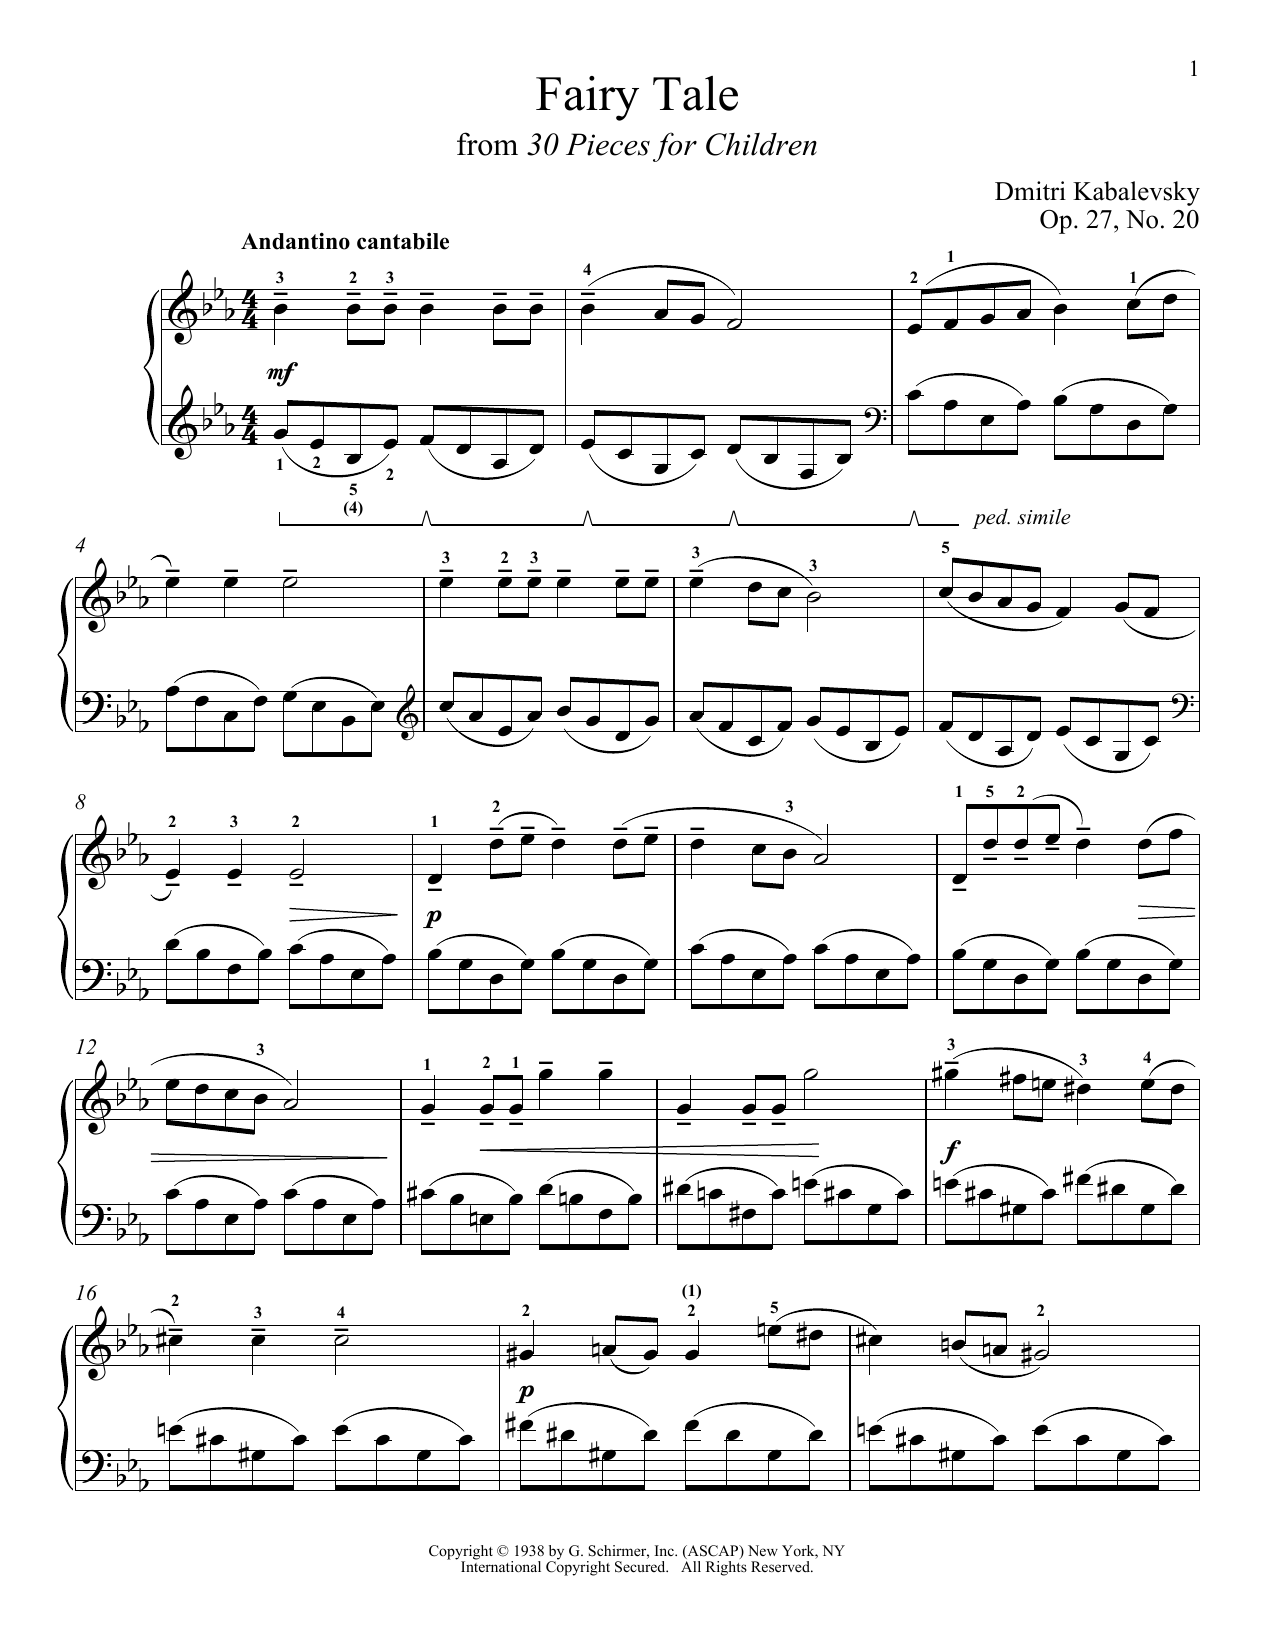 Download Dmitri Kabalevsky Fairy Tale, Op. 27, No. 20 Sheet Music